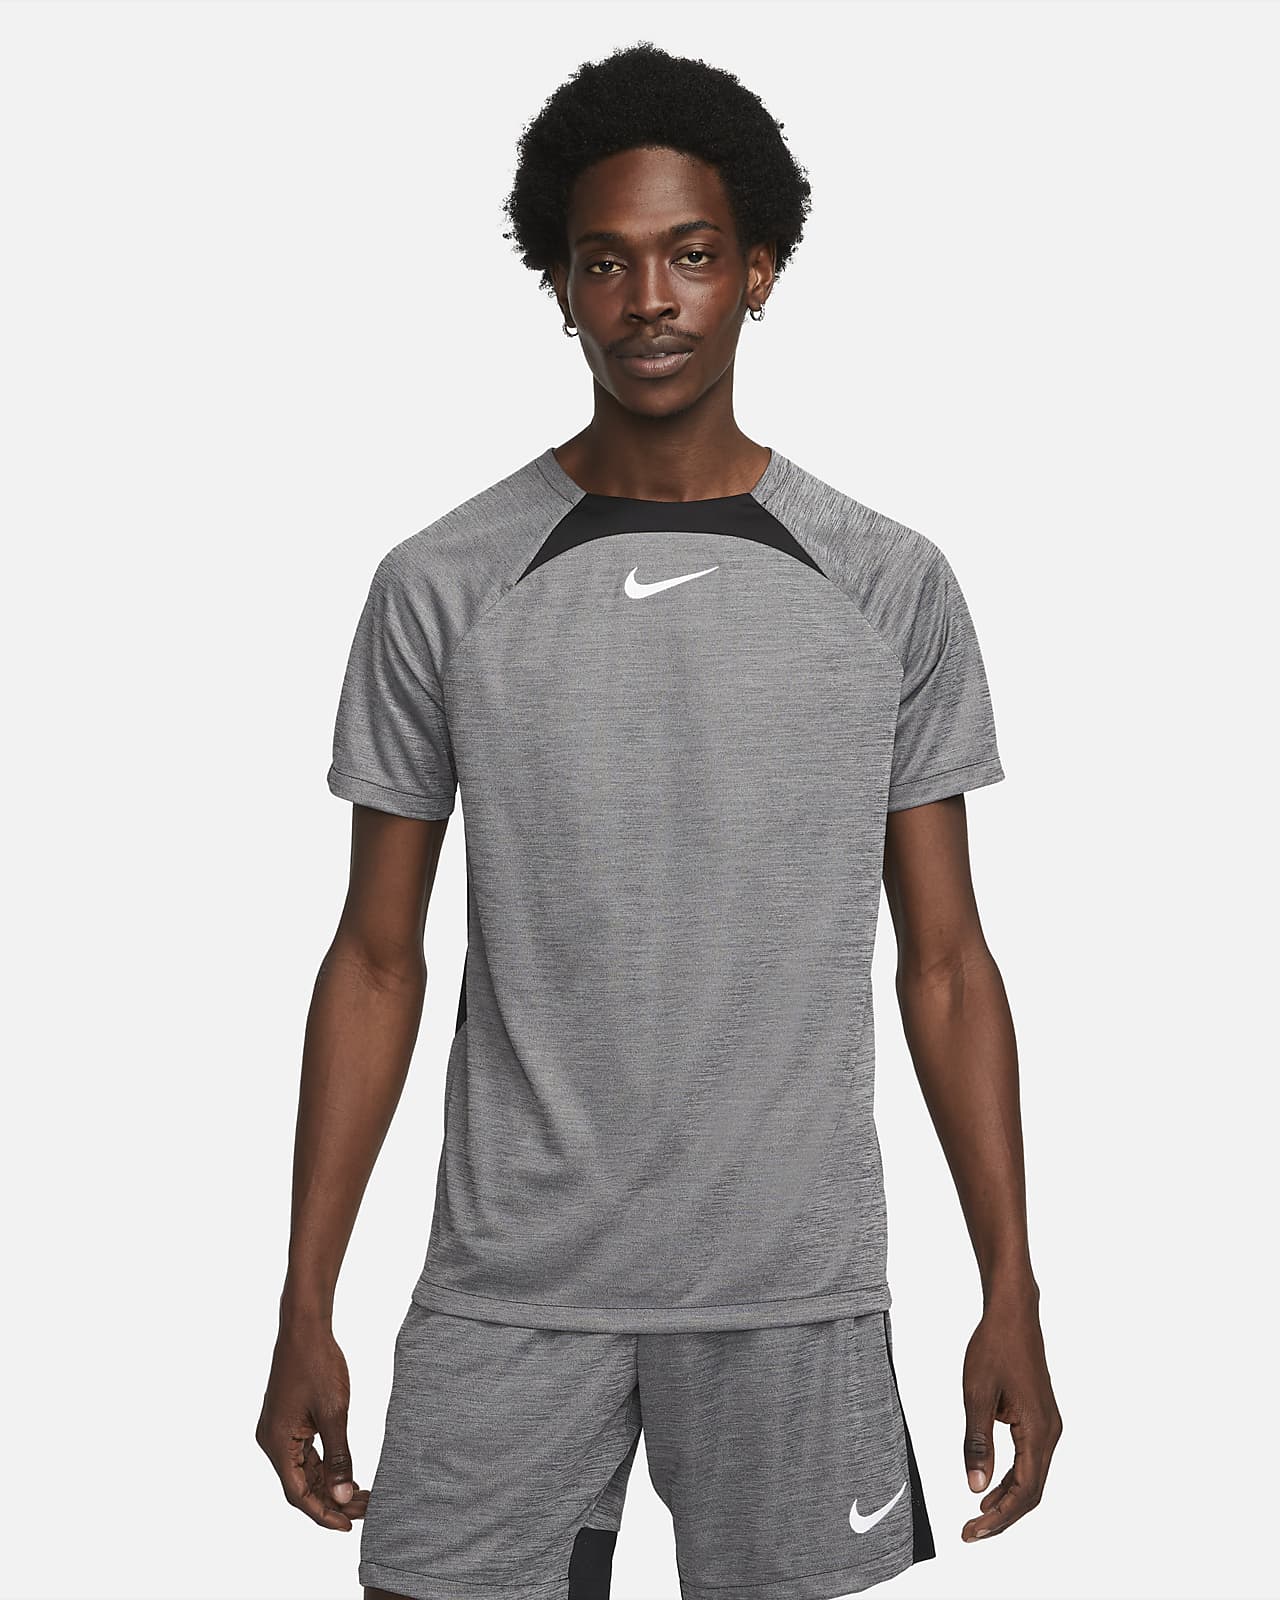 buik Beschuldiging Nietje Nike Dri-FIT Academy Men's Short-Sleeve Football Top. Nike IL